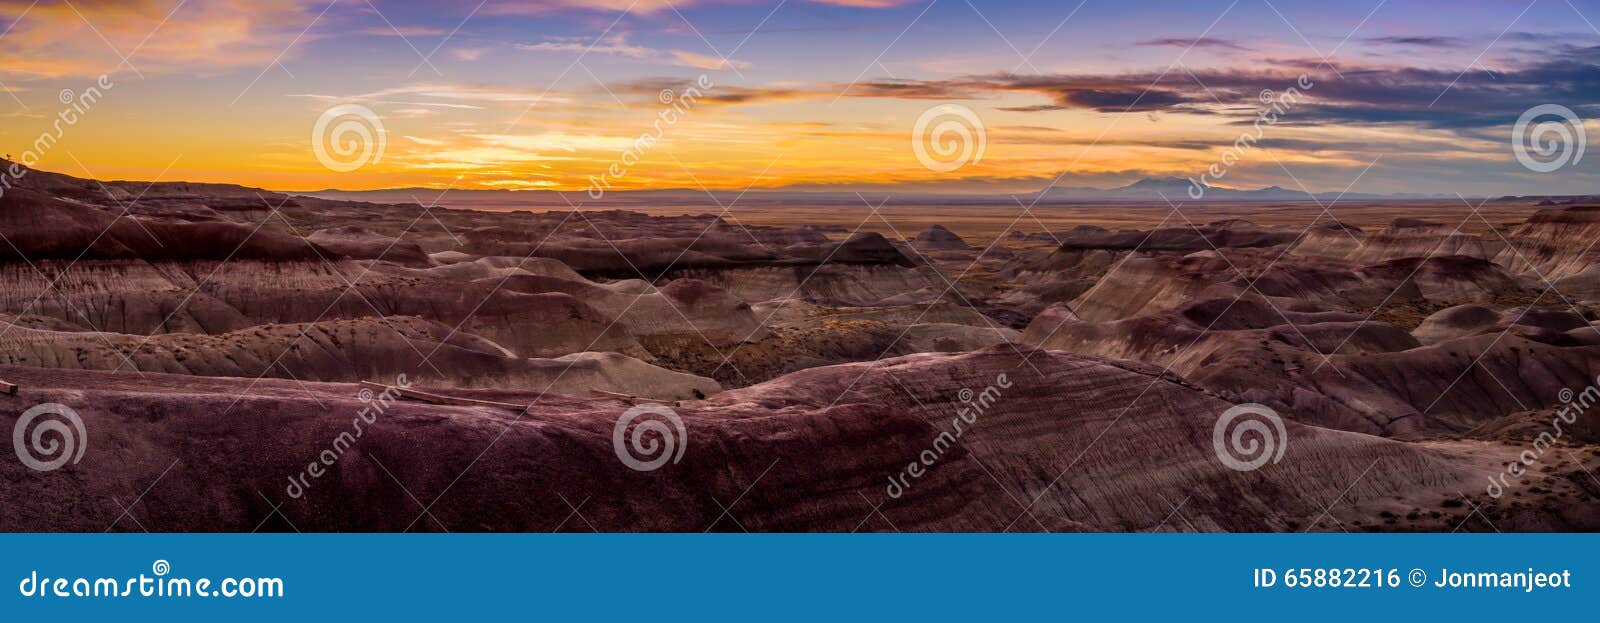 Painted Desert Sunset stock photo. Image of landscape - 65882216